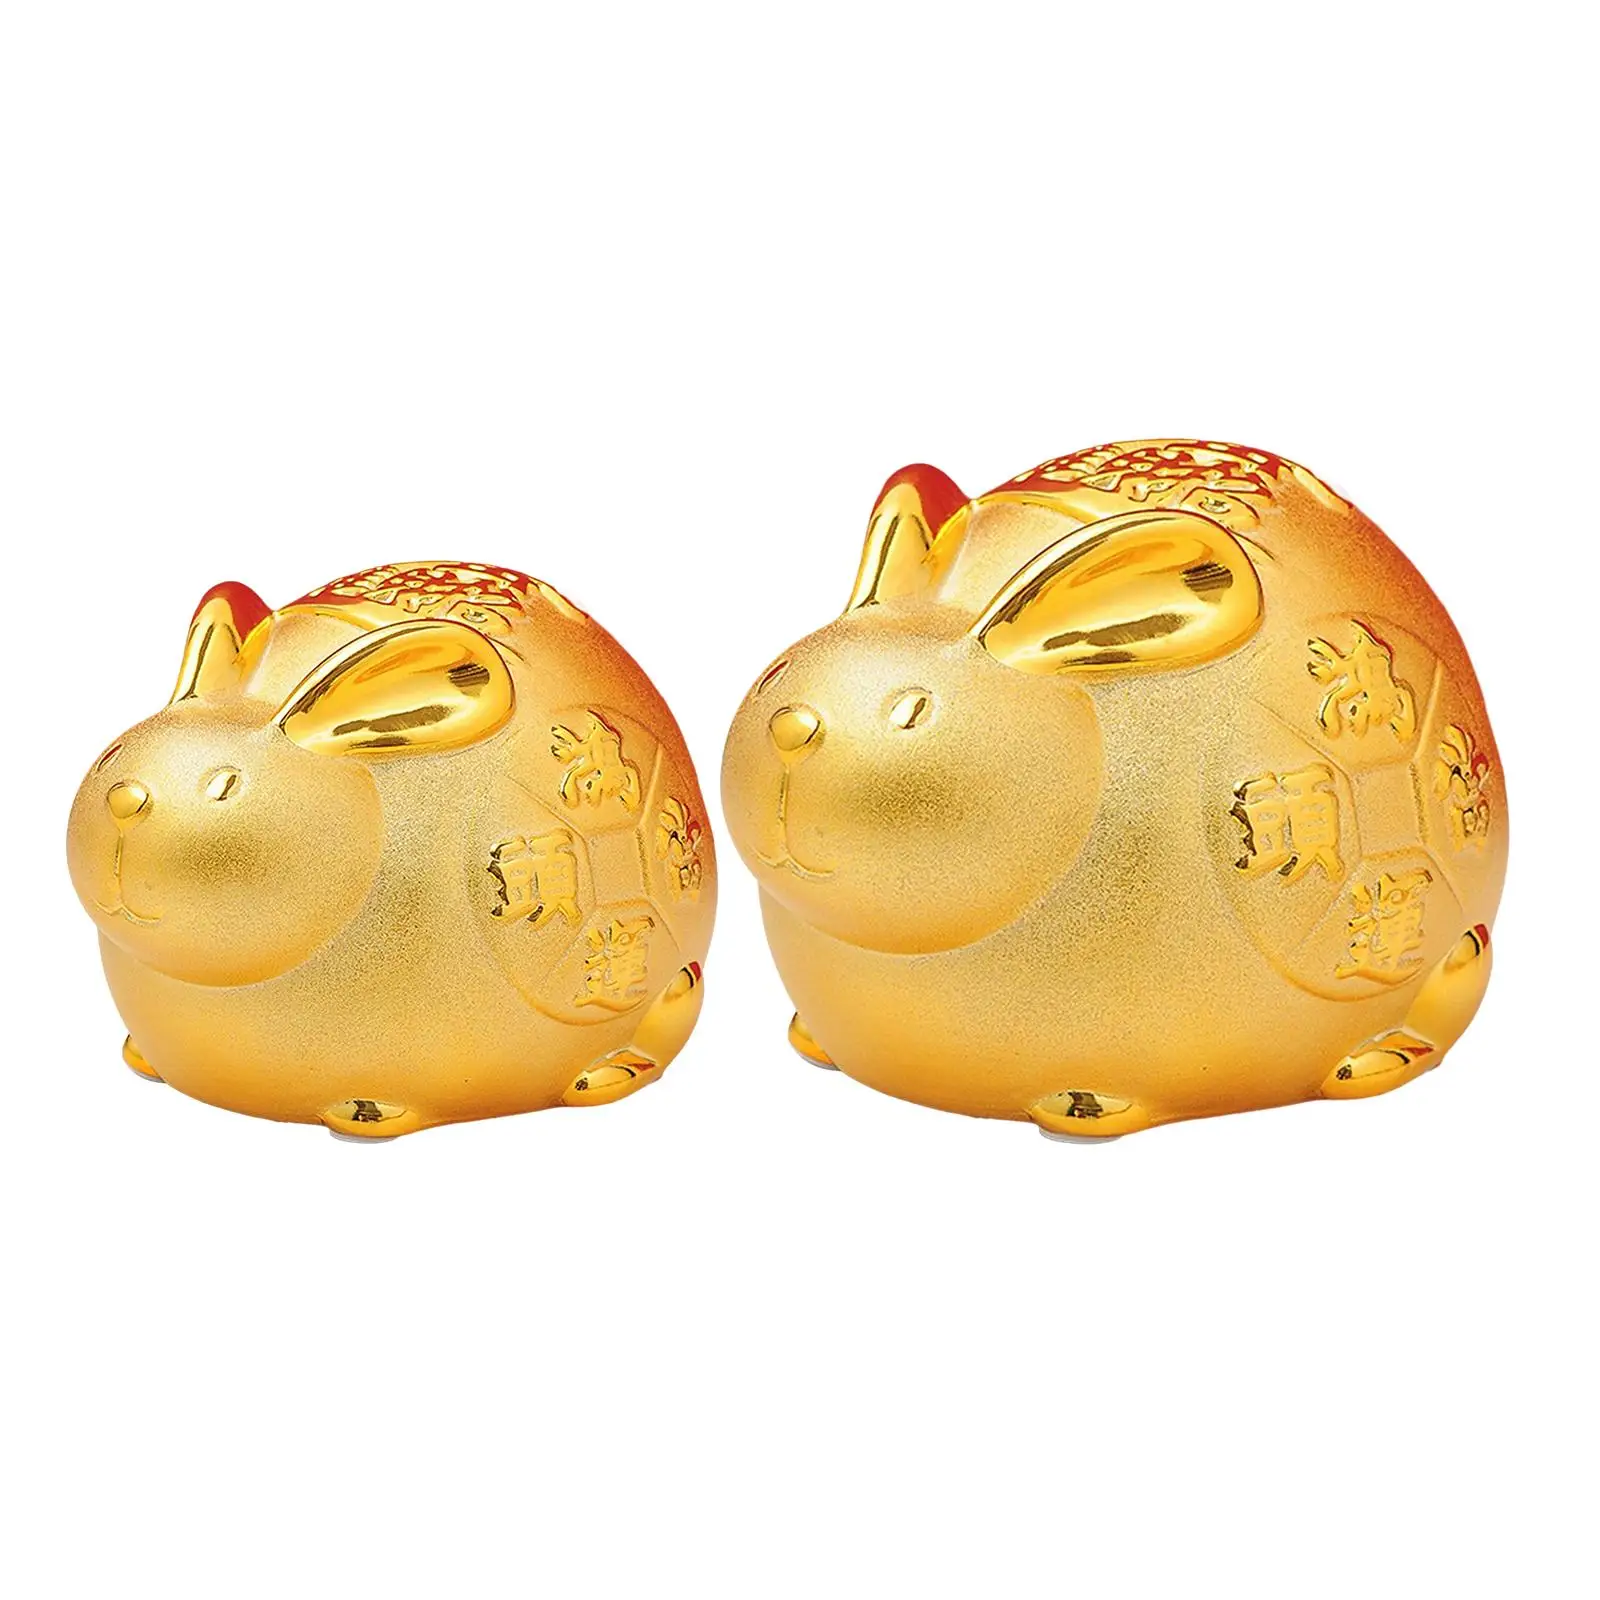 Lucky Rabbit Money Bank Animal Figurine Money Box Crafts for Home Art Decor